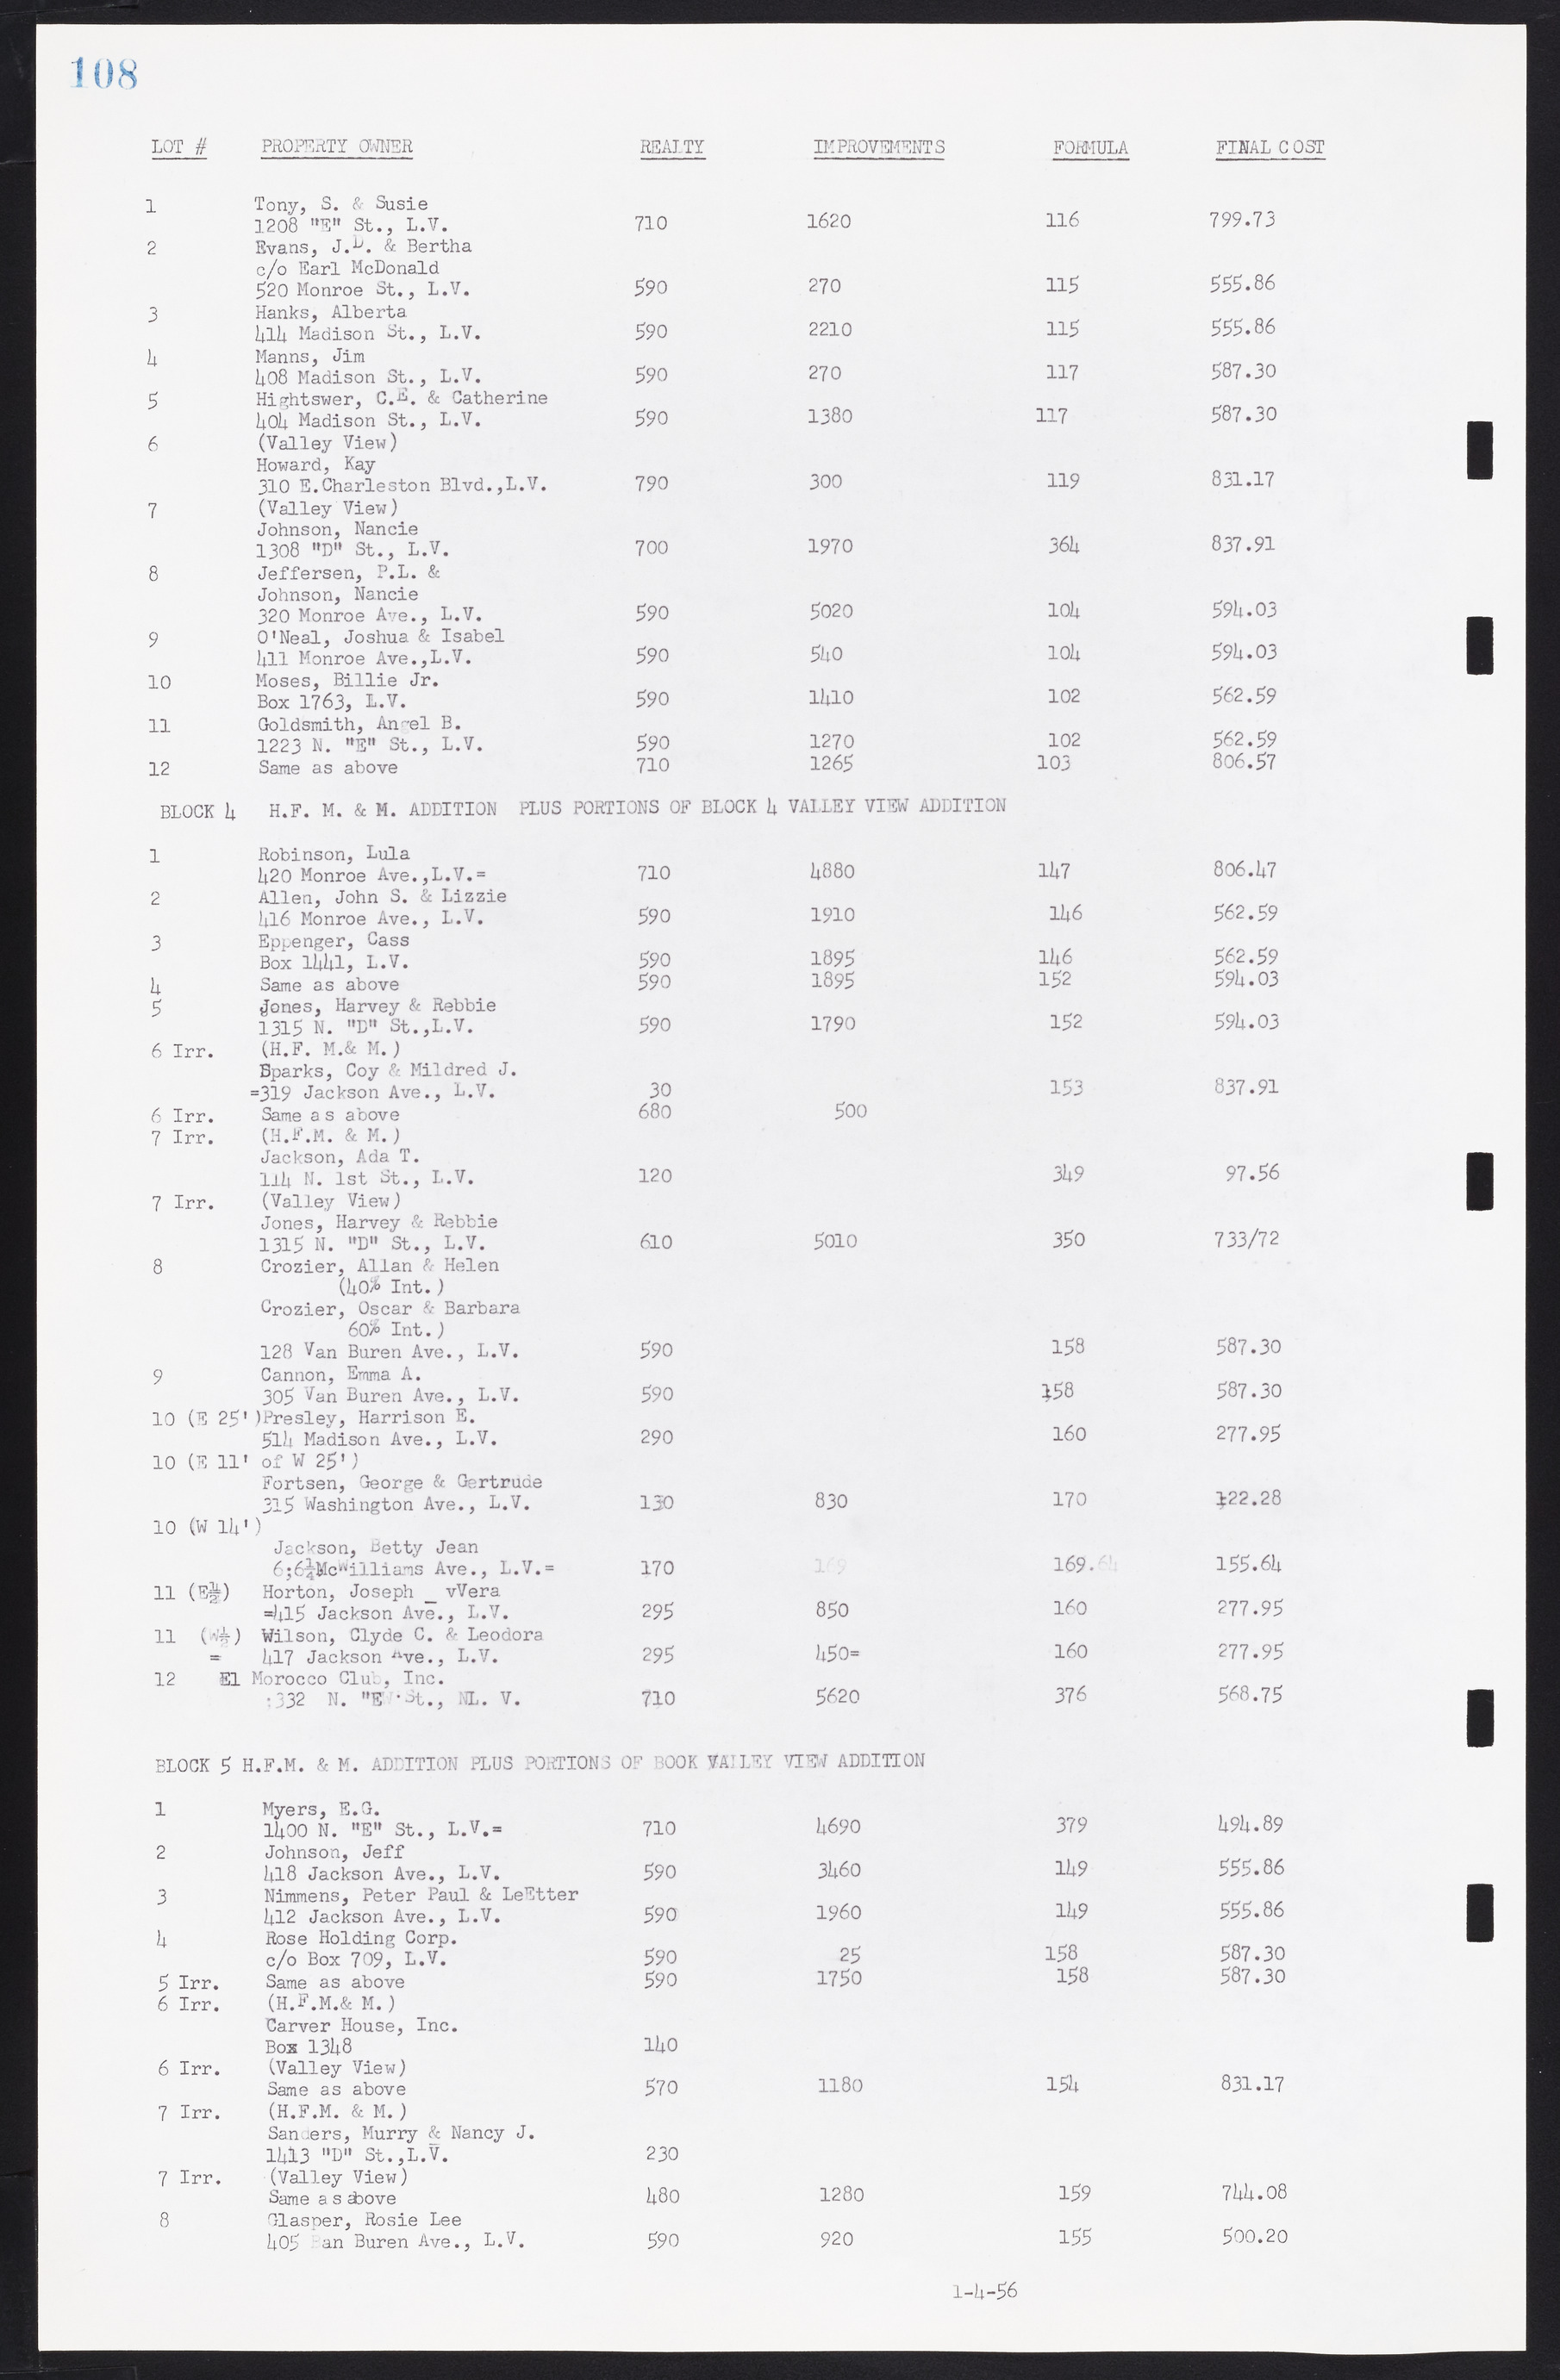 Las Vegas City Commission Minutes, September 21, 1955 to November 20, 1957, lvc000010-118